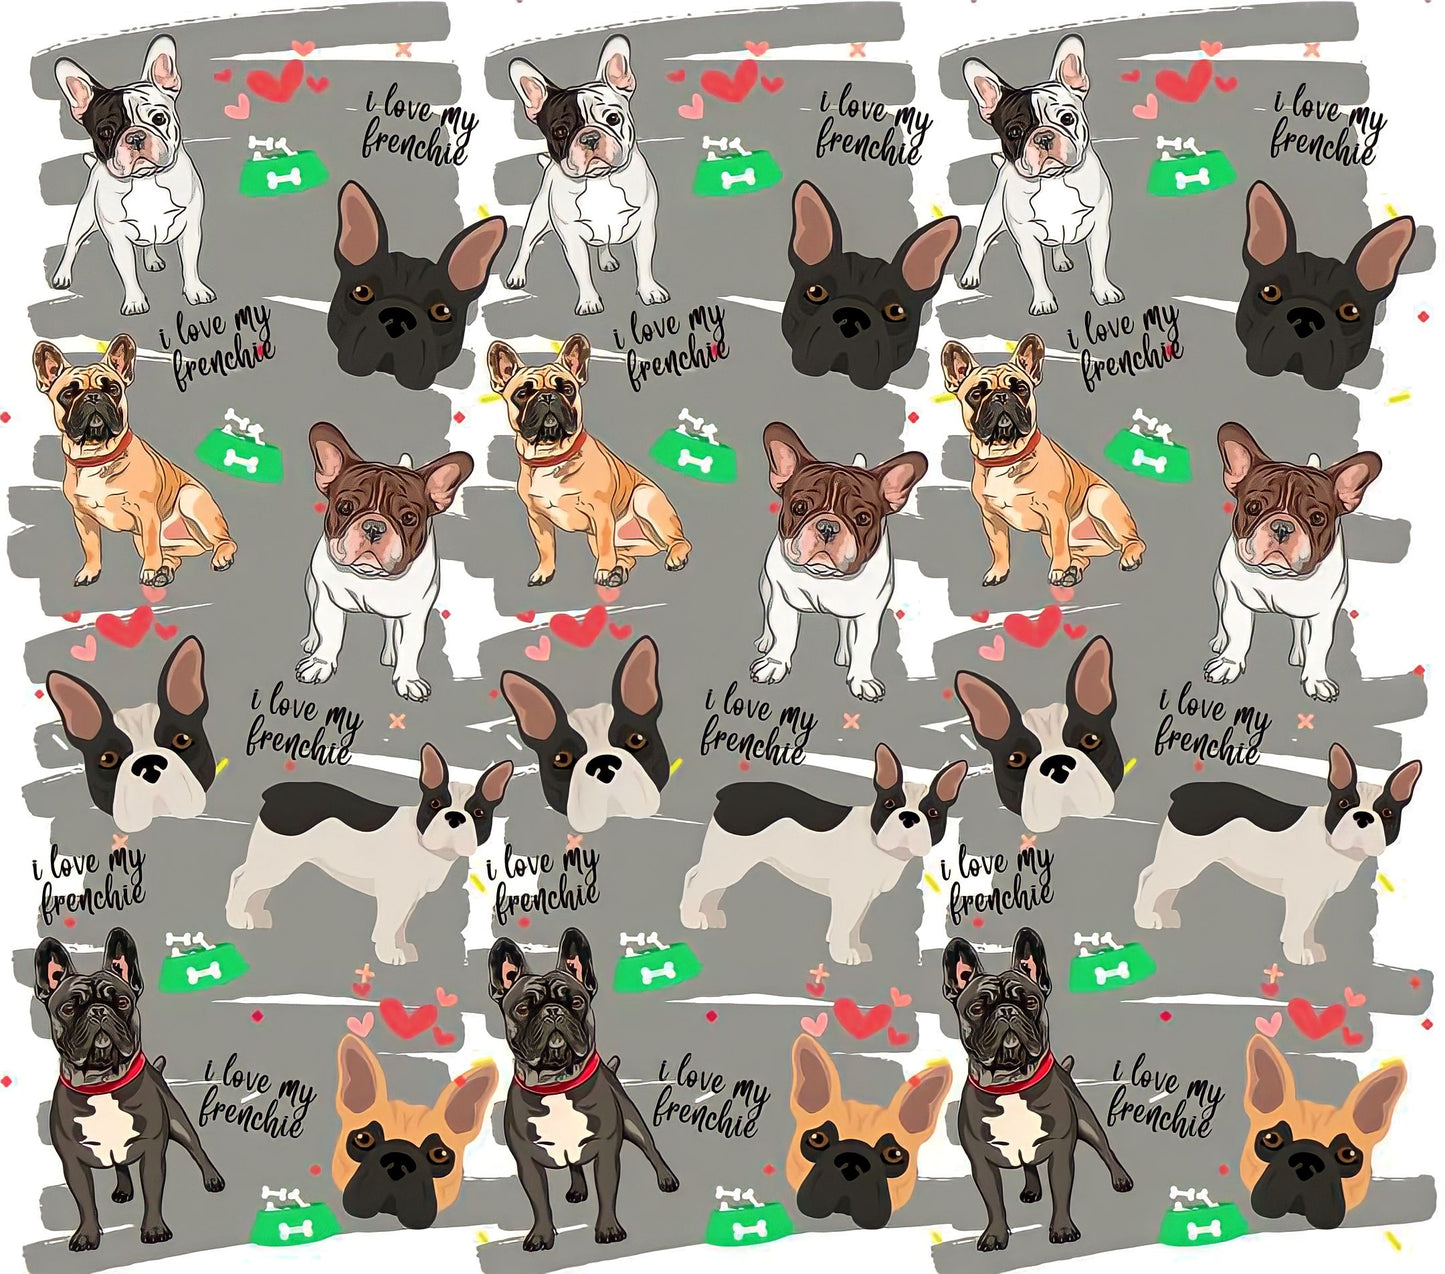 French Bulldog Appreciation - Cartoon - "I Love My Frenchie" - Assorted Colored Dogs w/ Grey Background - 20 Oz Sublimation Transfer